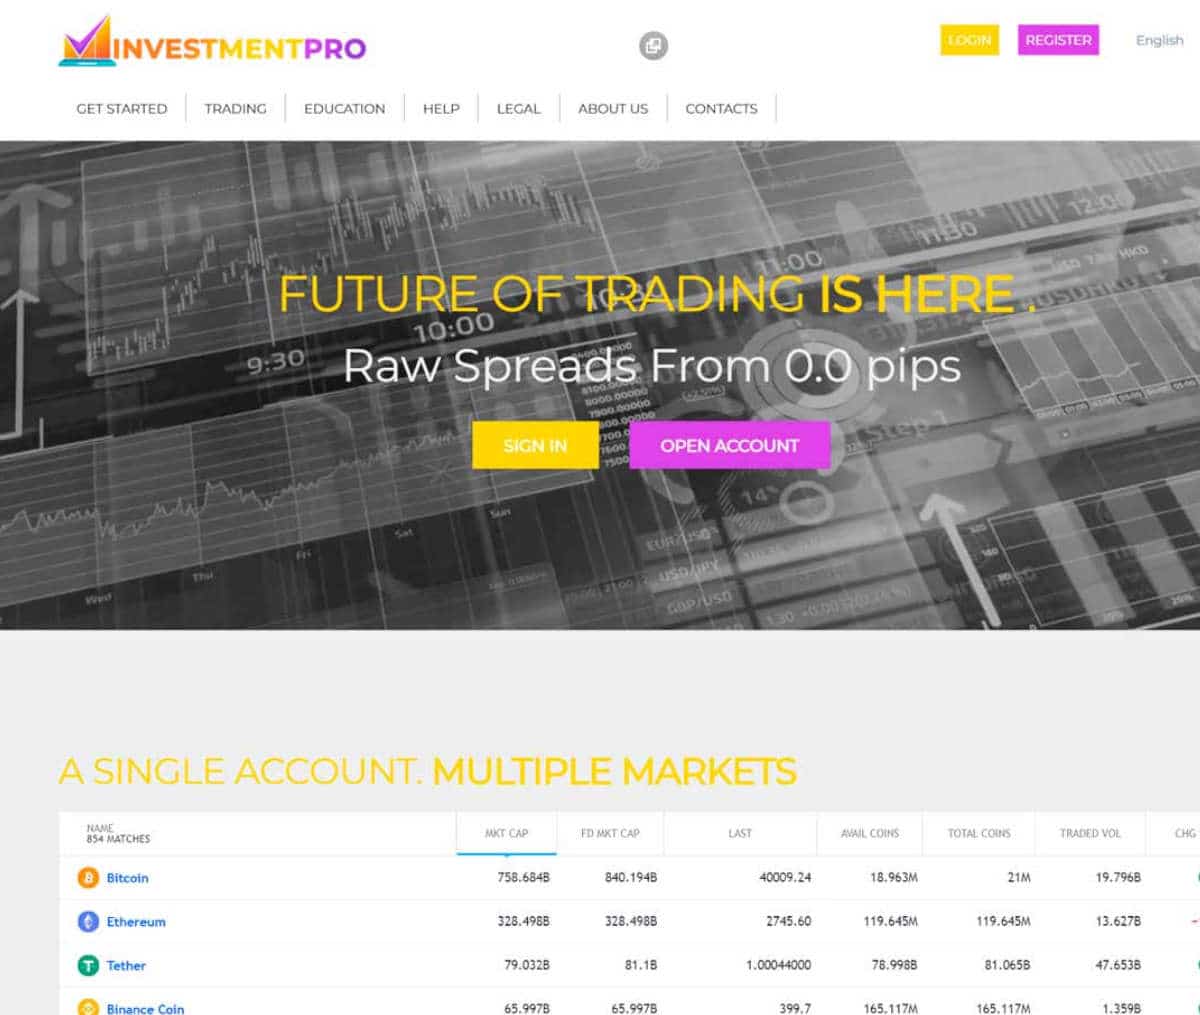 Página web de InvestmentPro